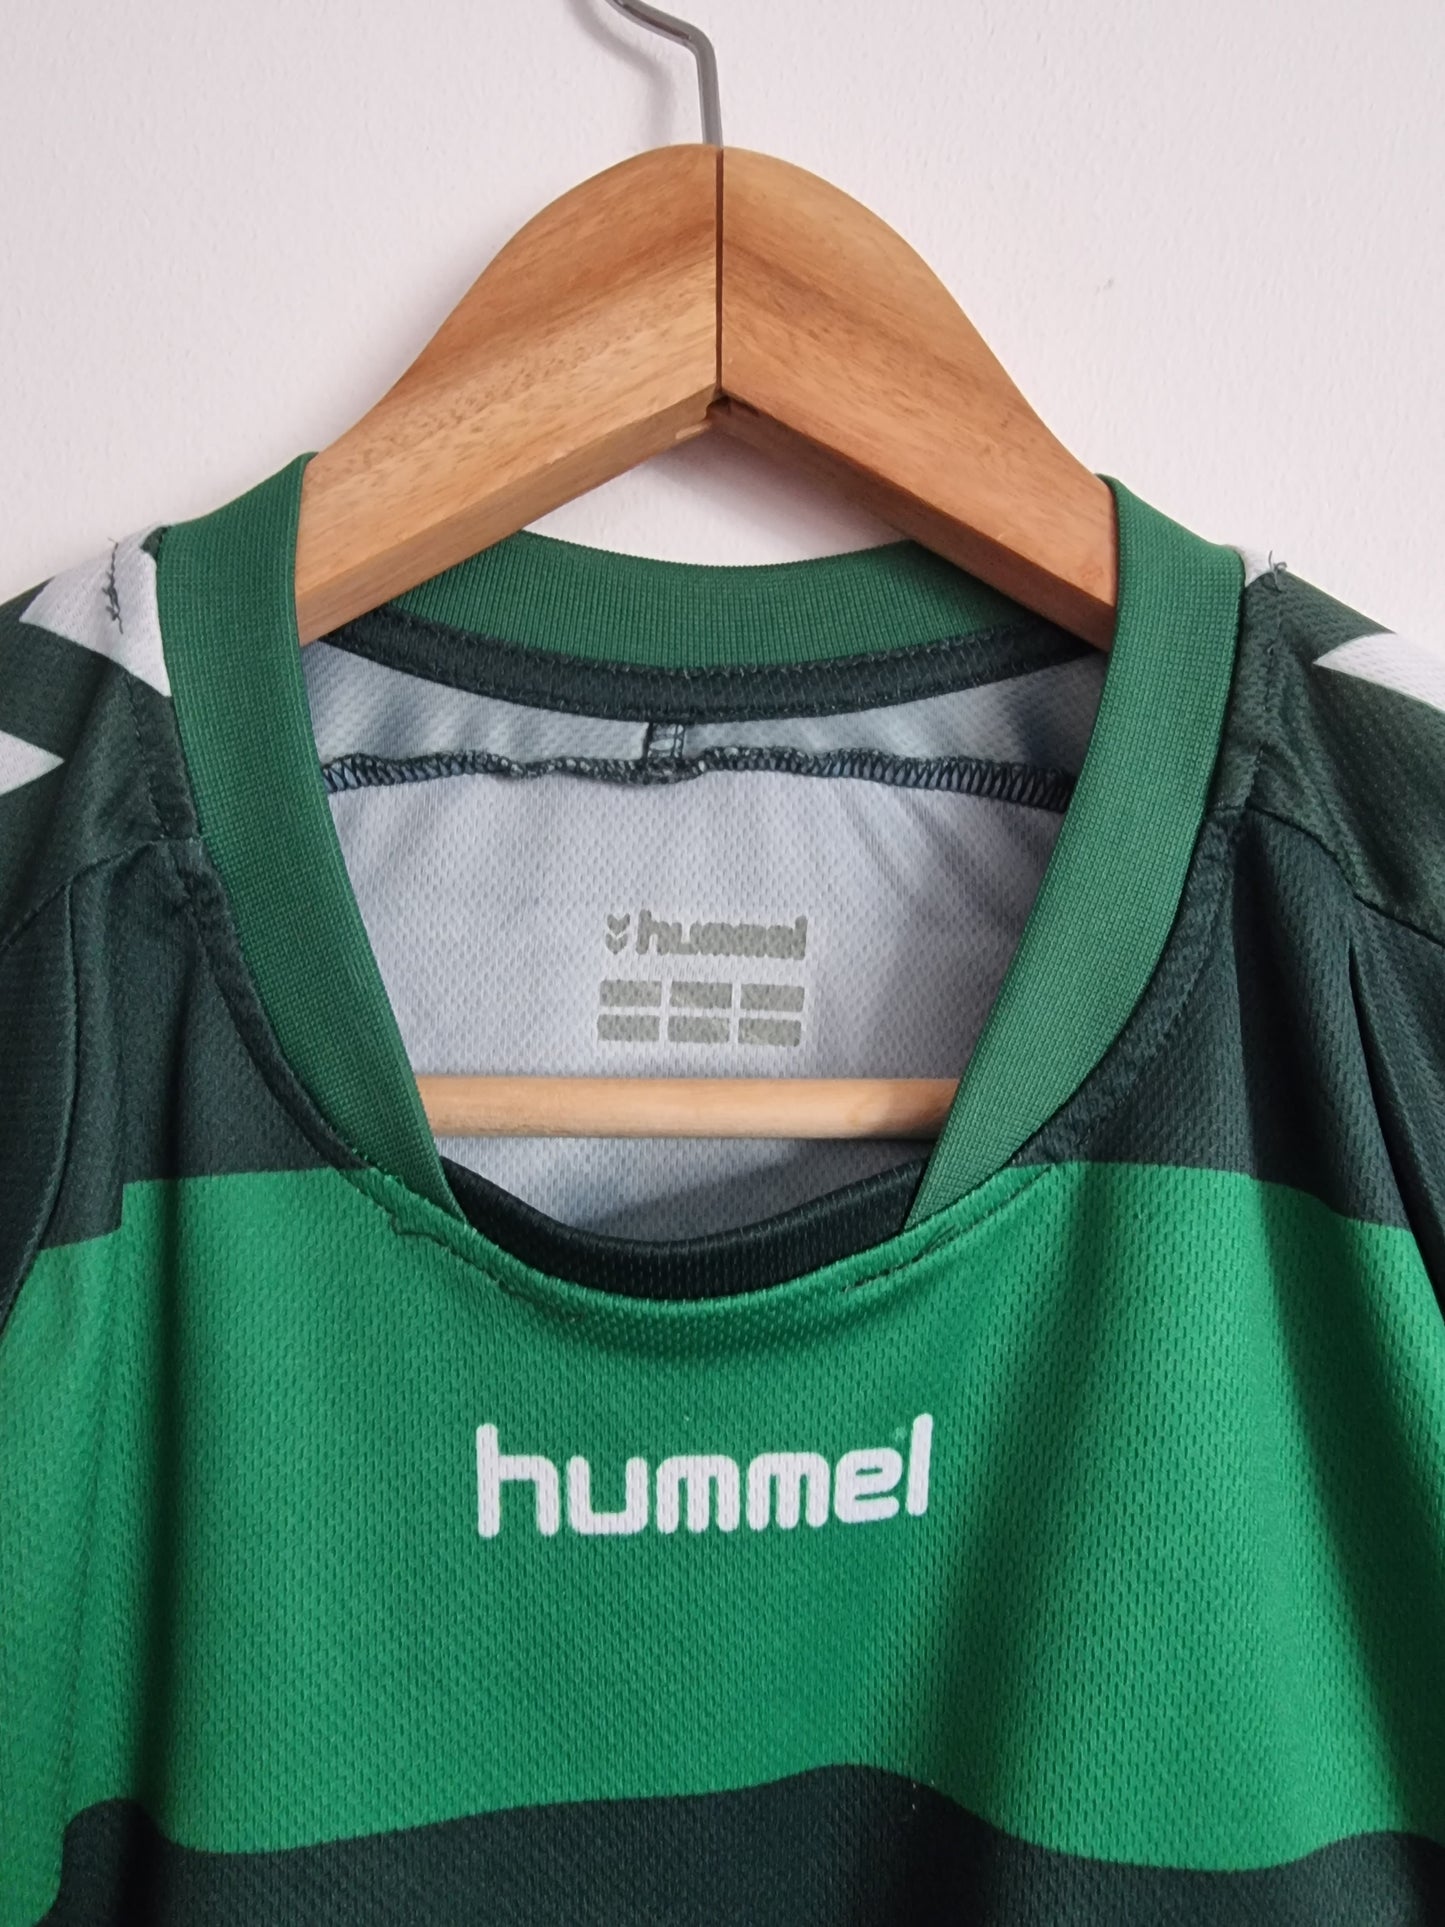 Hummel Anadolu Selcuk 16/17 'Candemir 94' Home Shirt Large